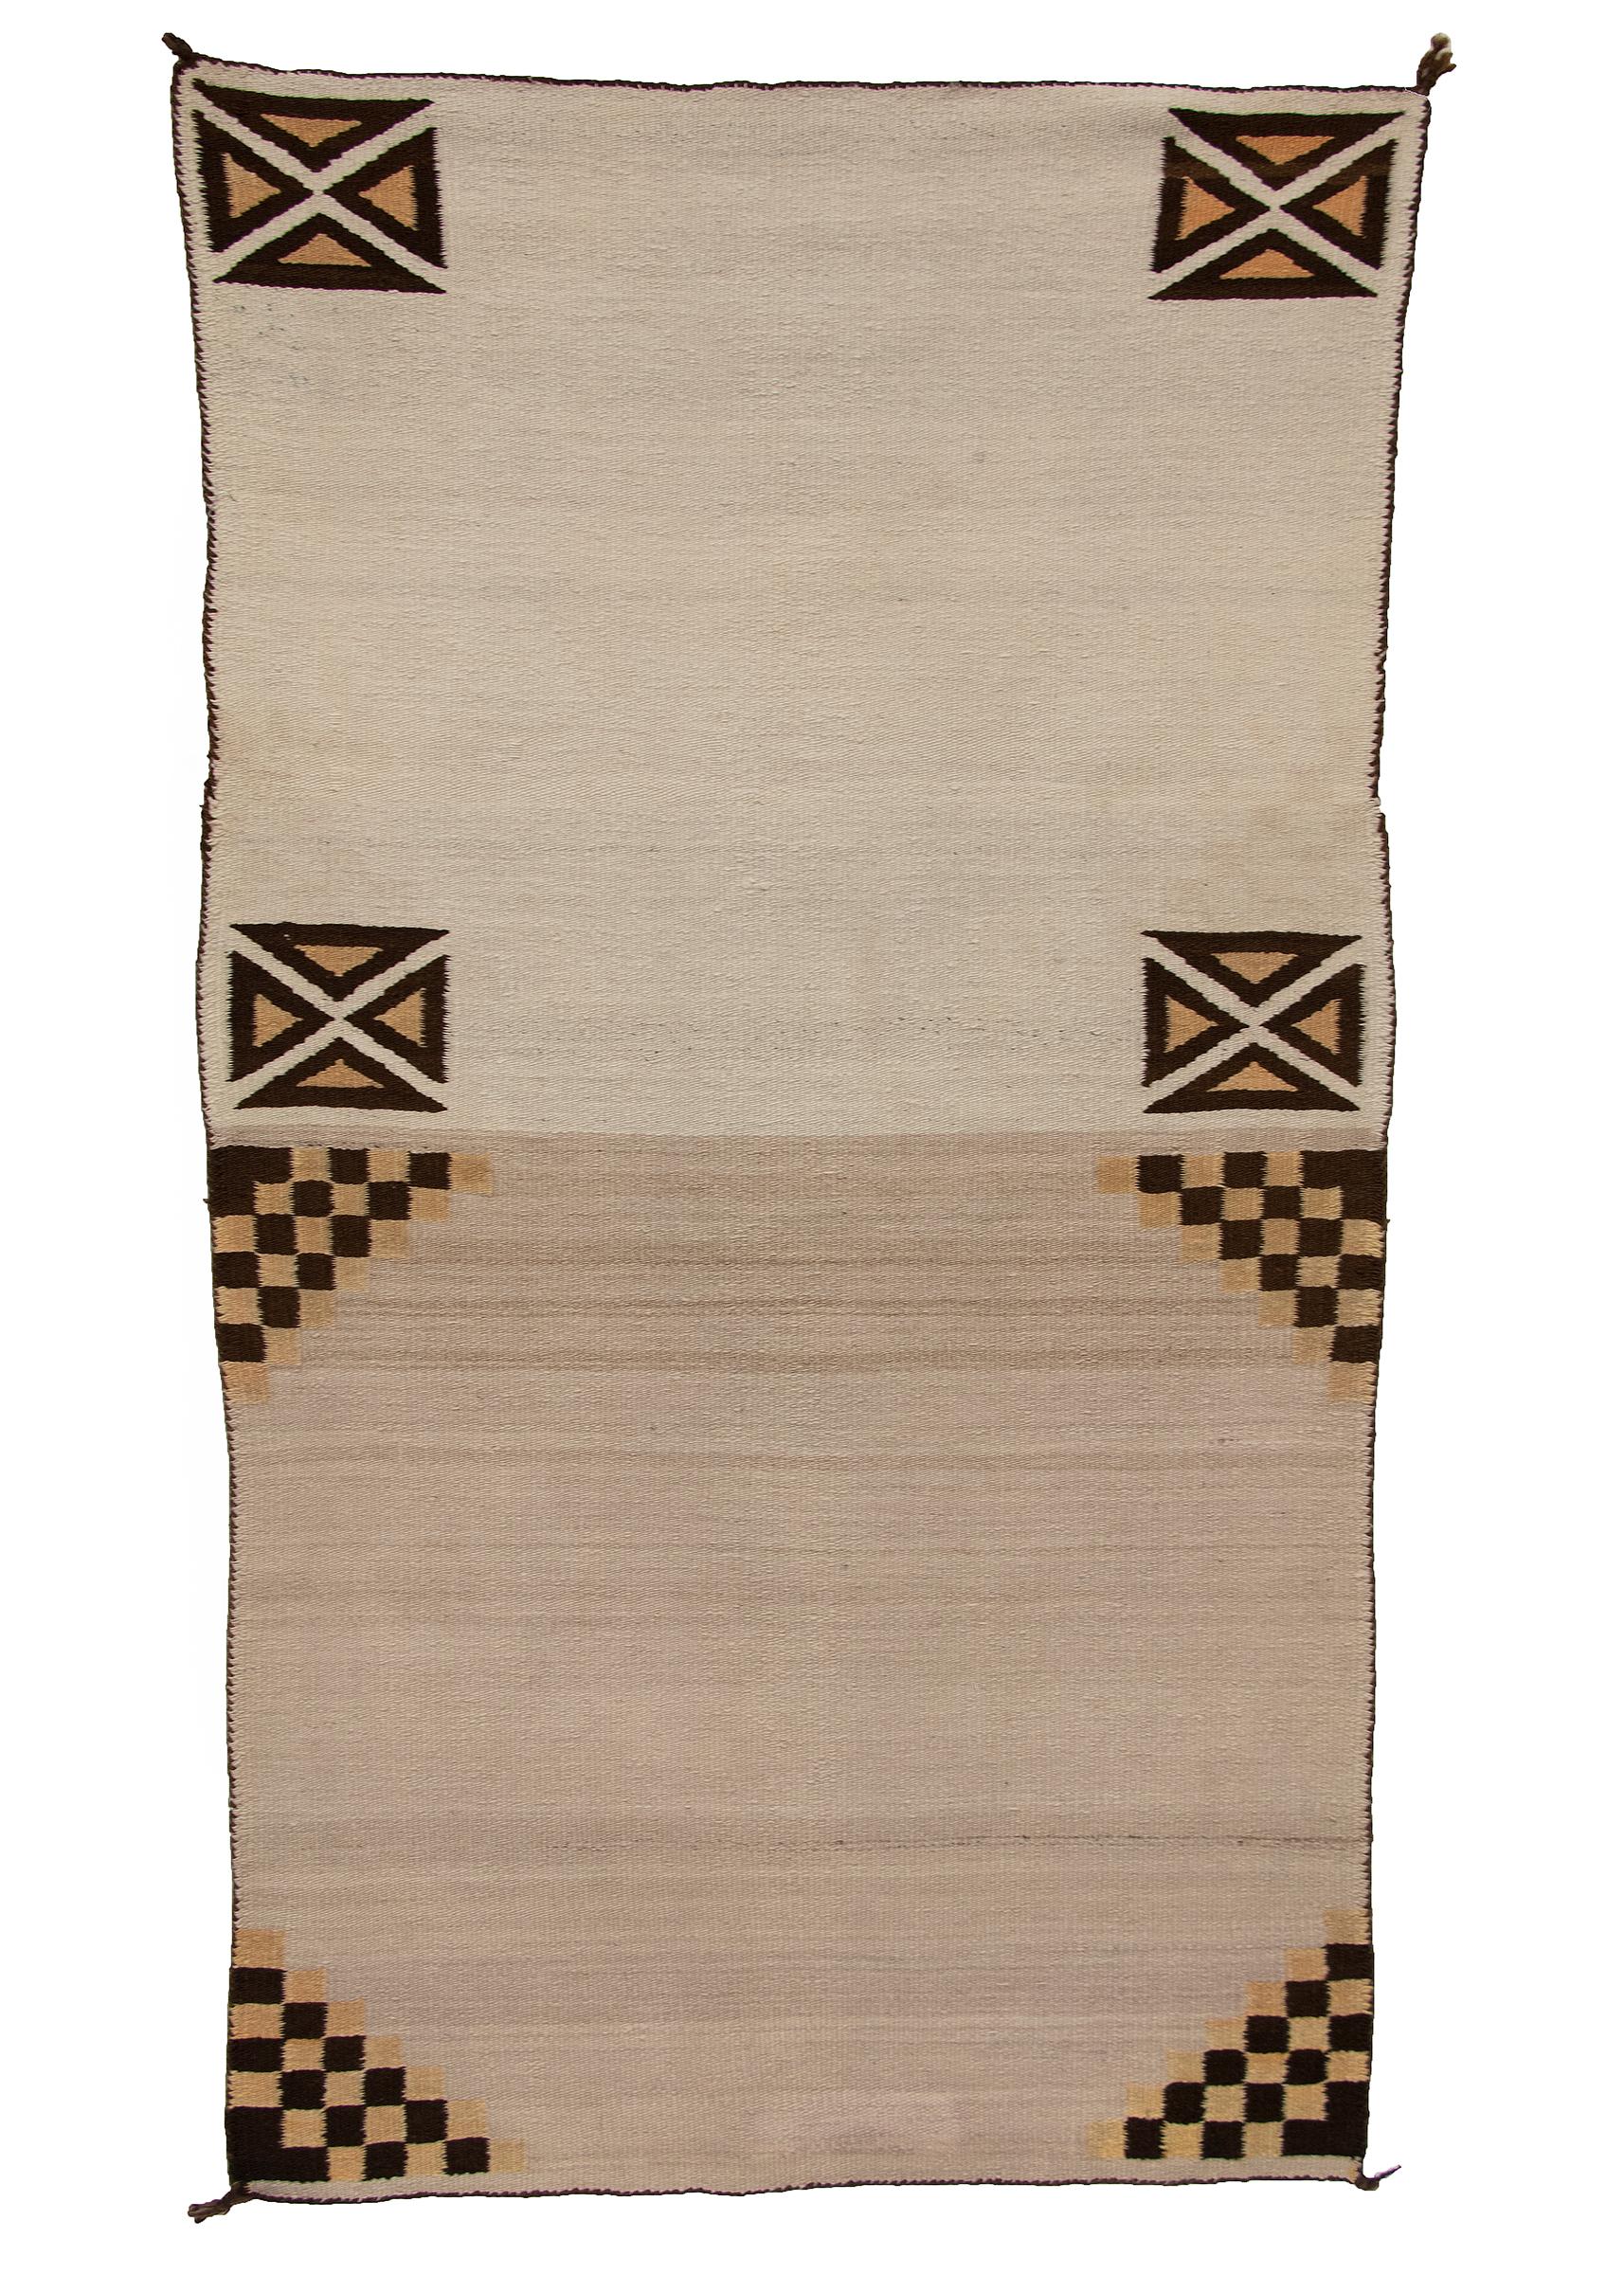 Dyed Vintage Navajo Double Saddle Blanket, 1920s, Maltese Cross, White Yellow Black